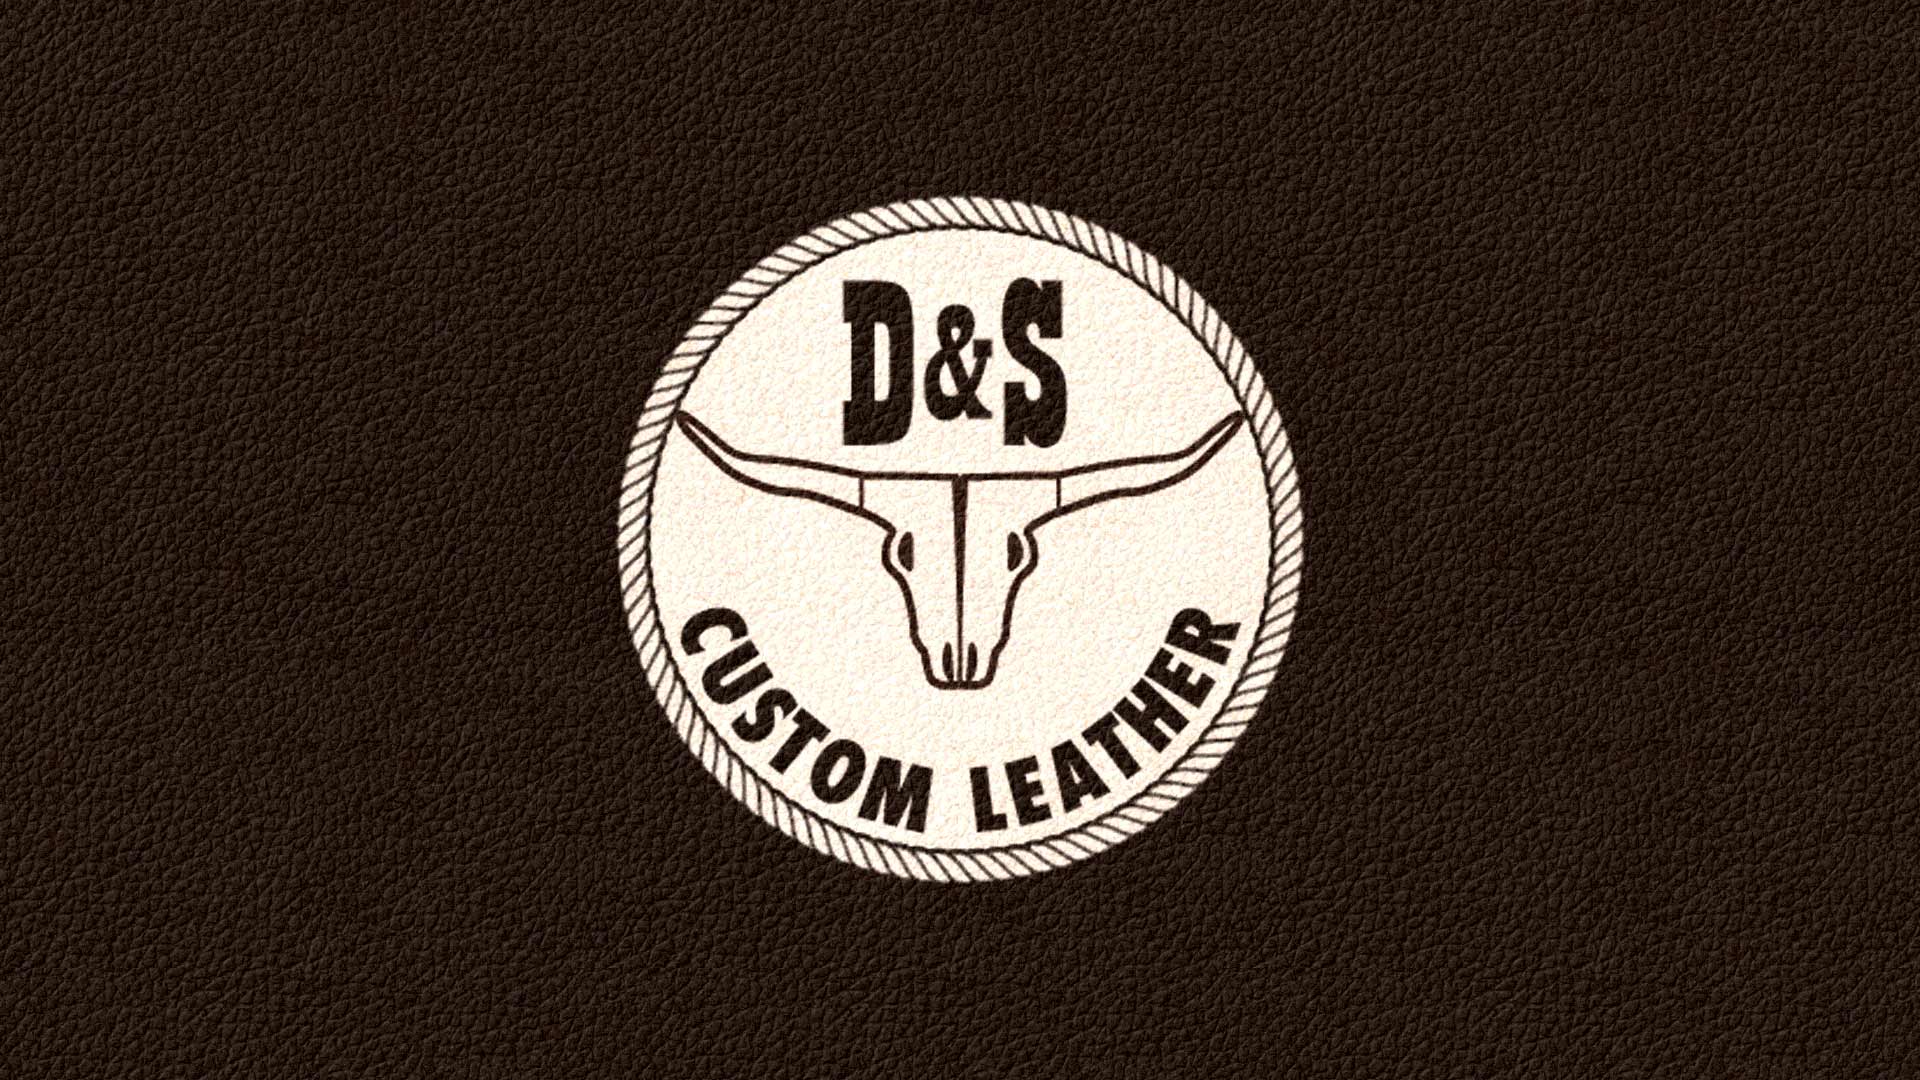 Home - D & S Custom Leather